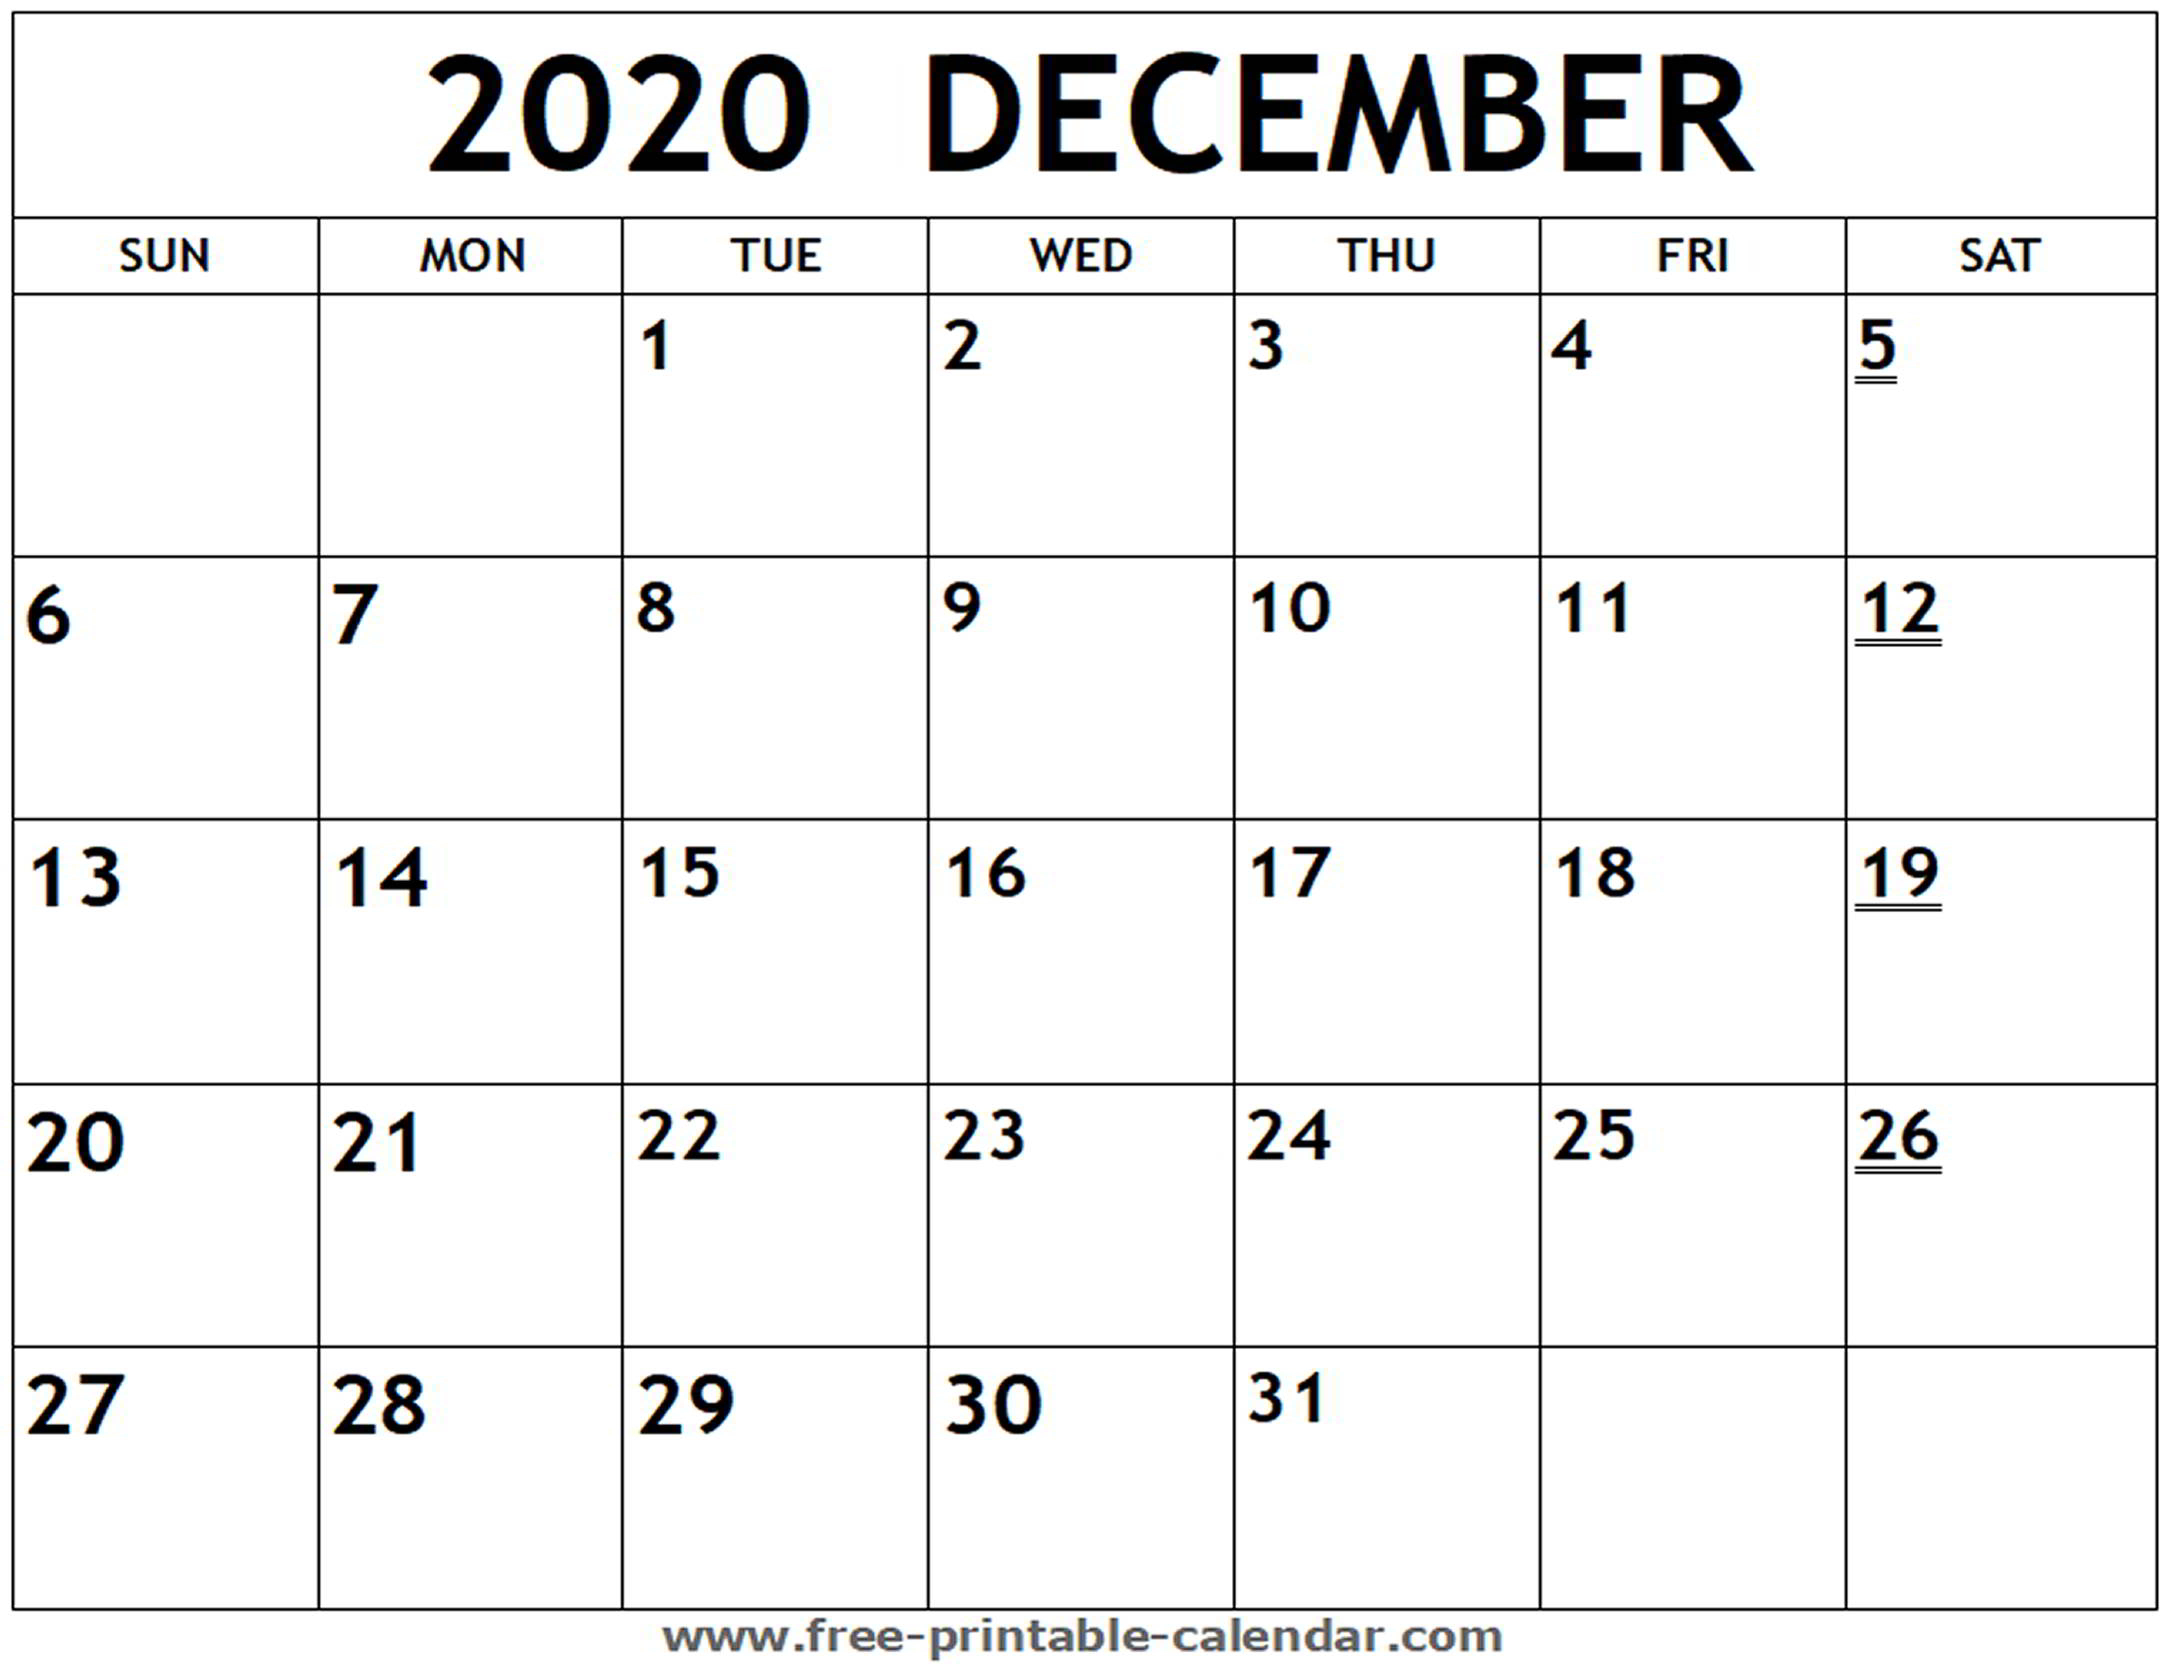 Print A Calendar December 2020 | Calendar Printables Free ...